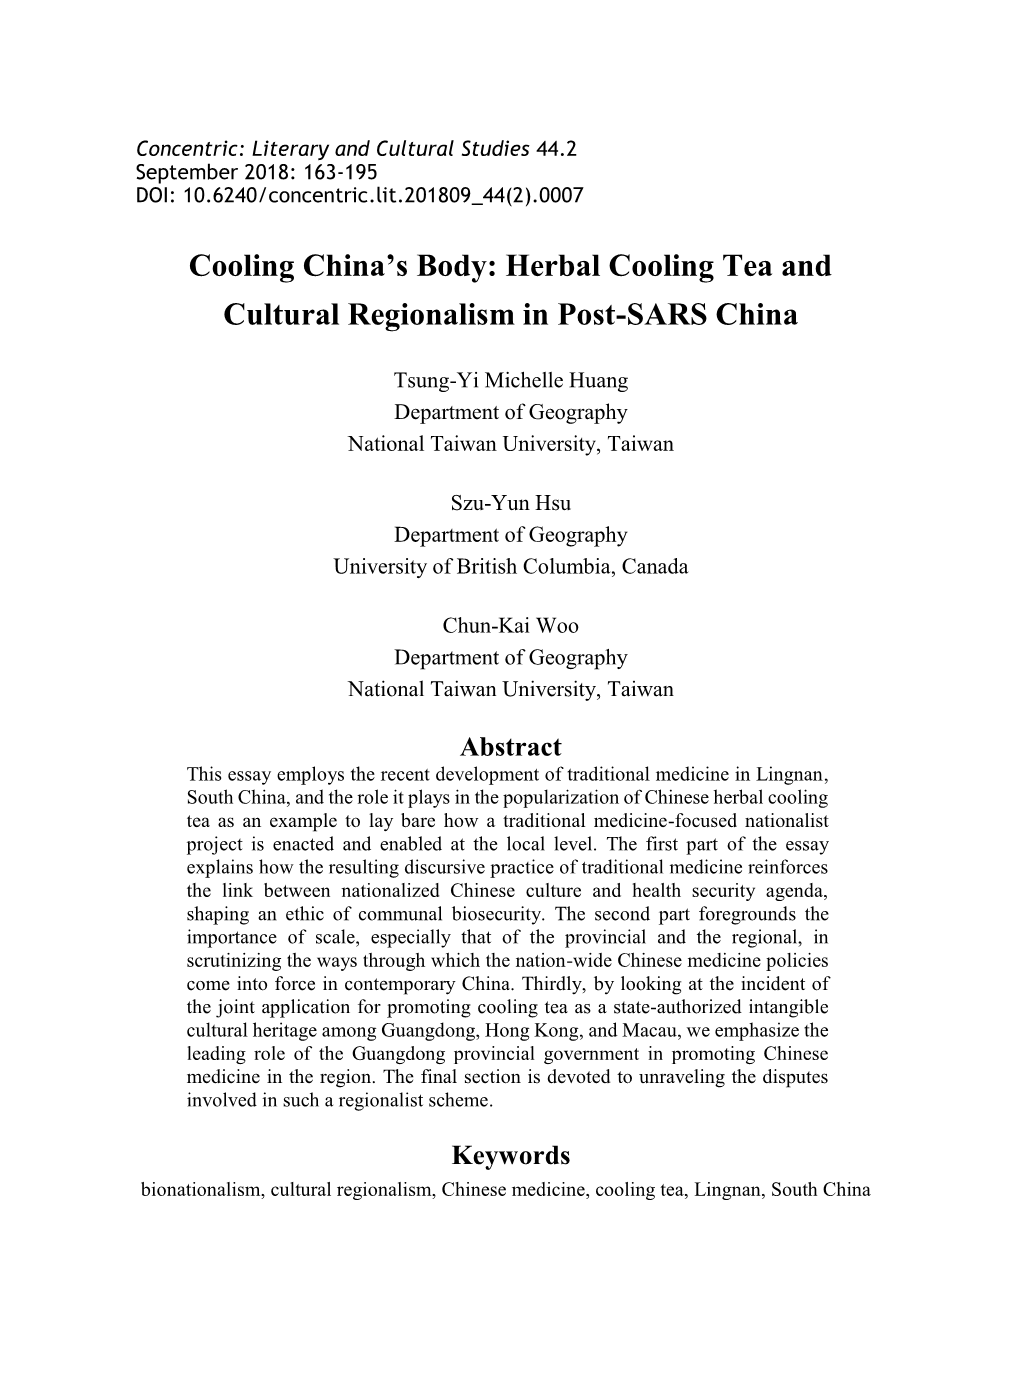 Herbal Cooling Tea and Cultural Regionalism in Post-SARS China